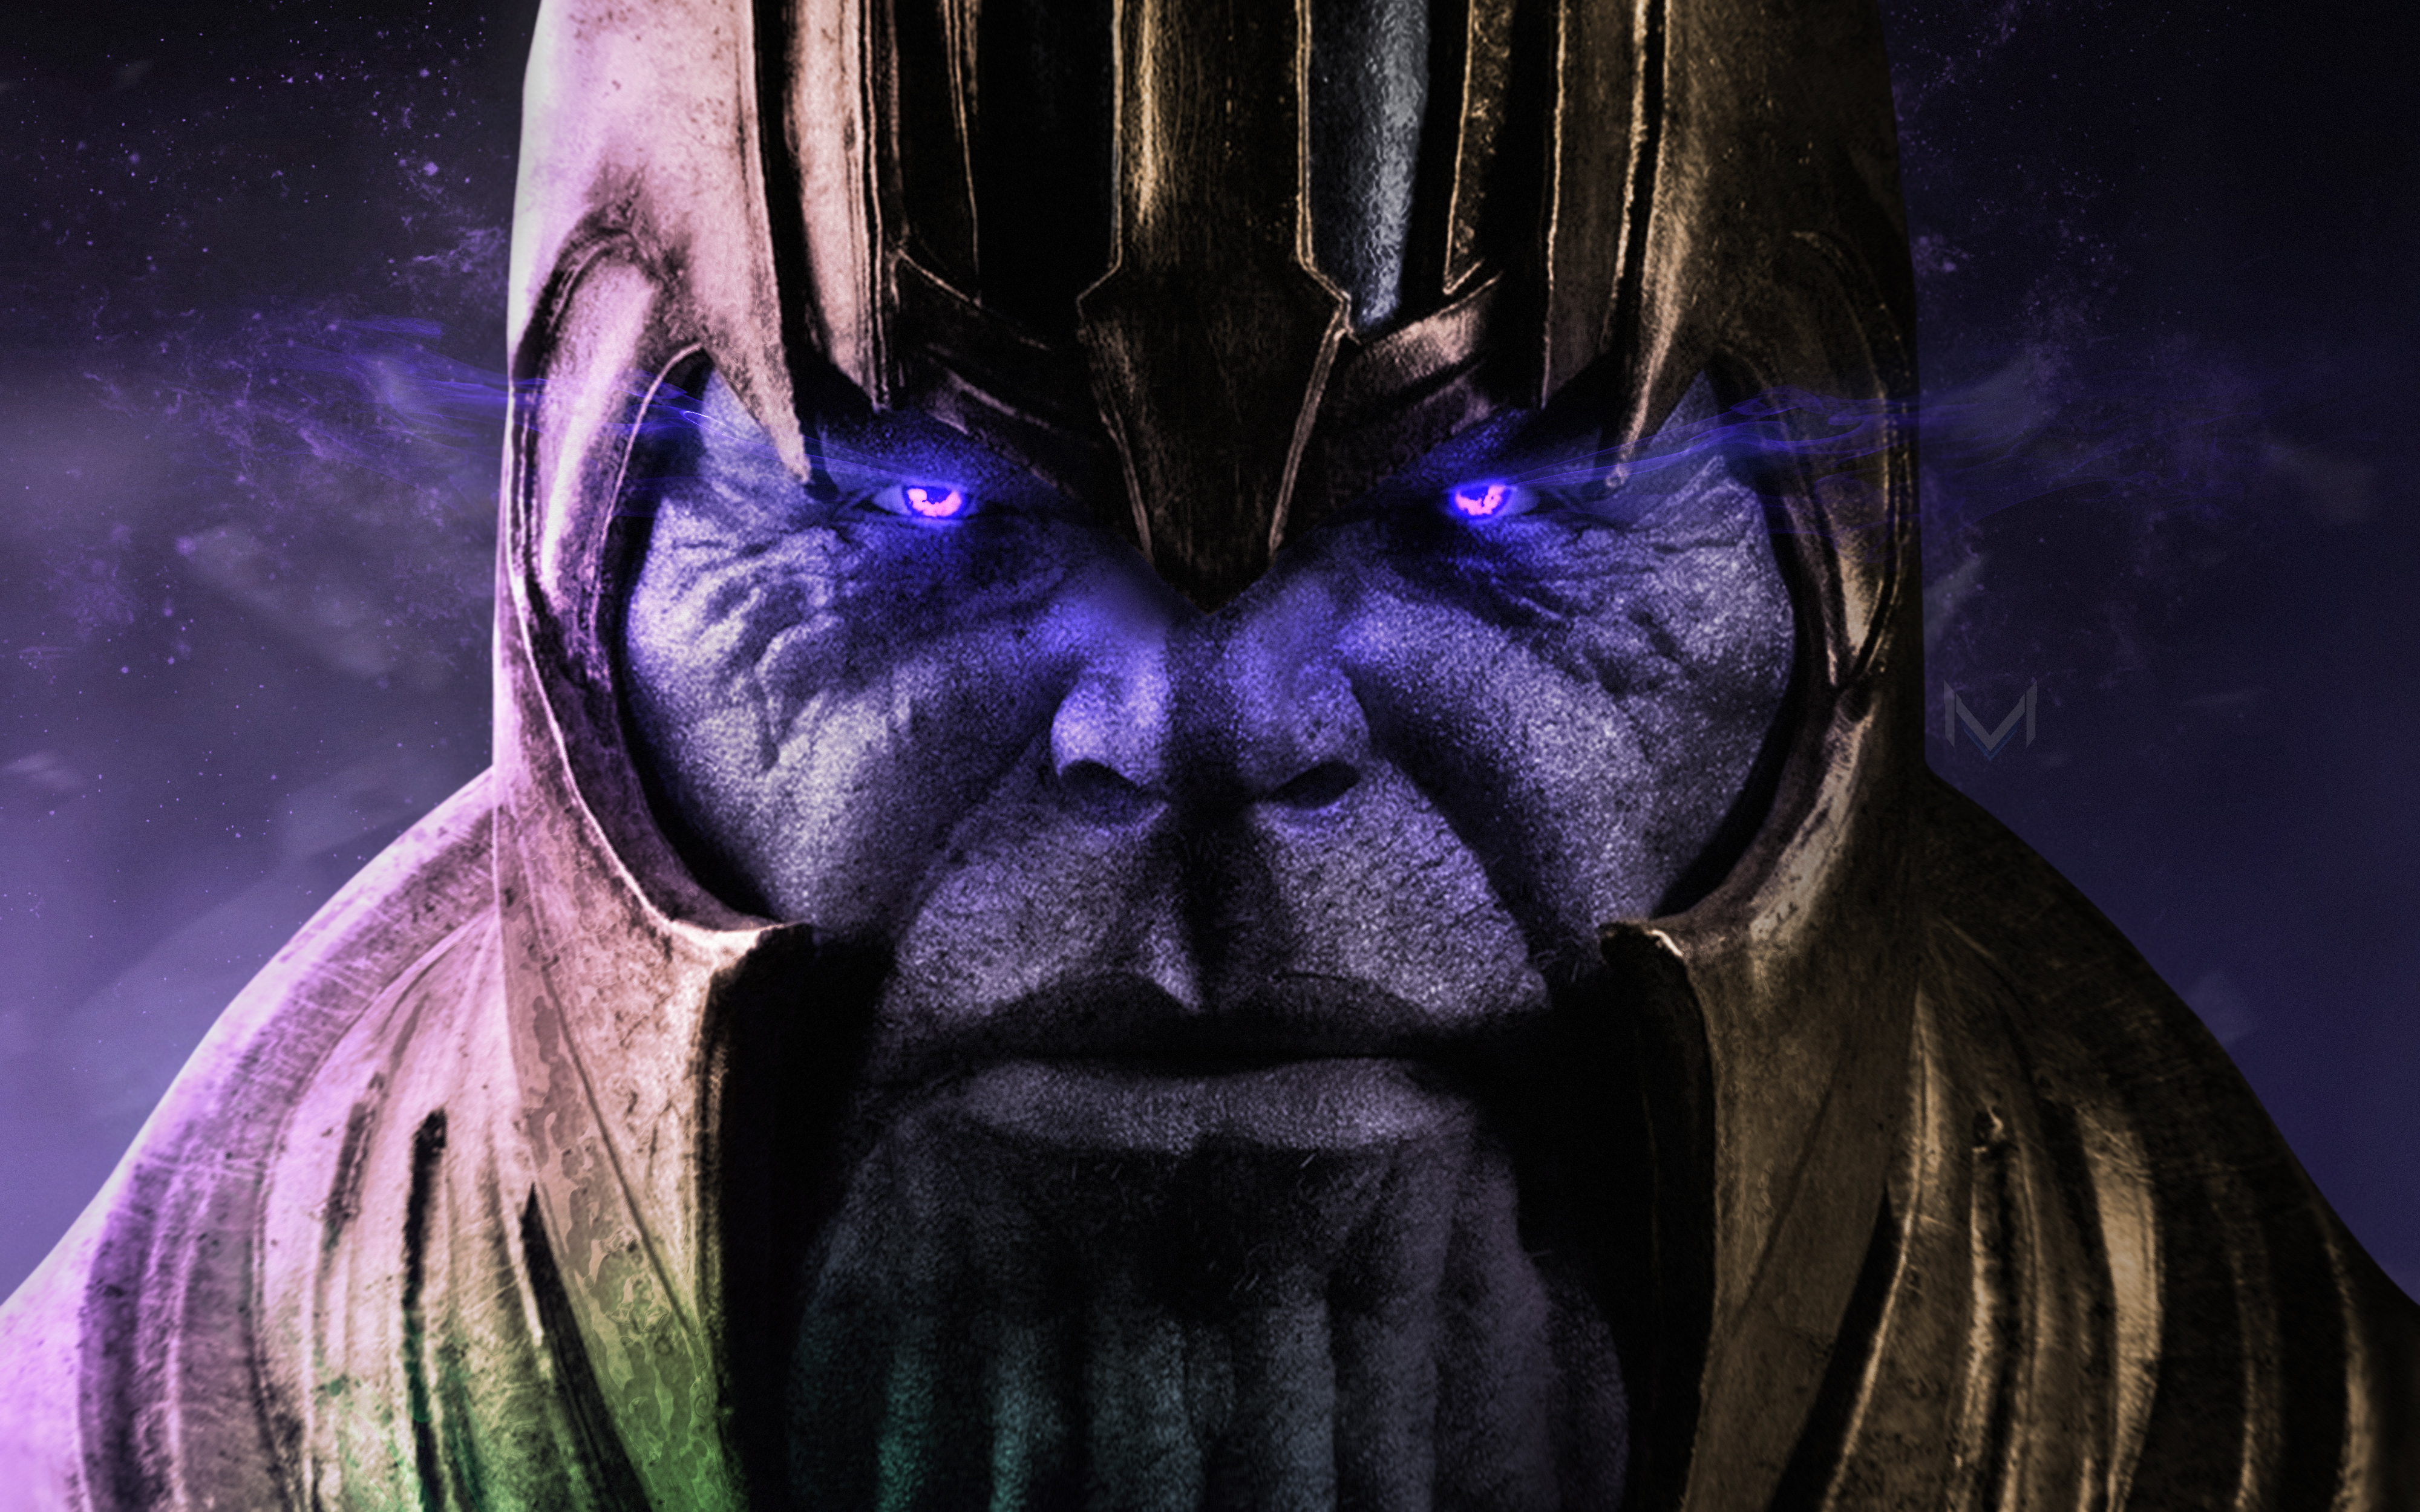 Thanos Artwork 4K